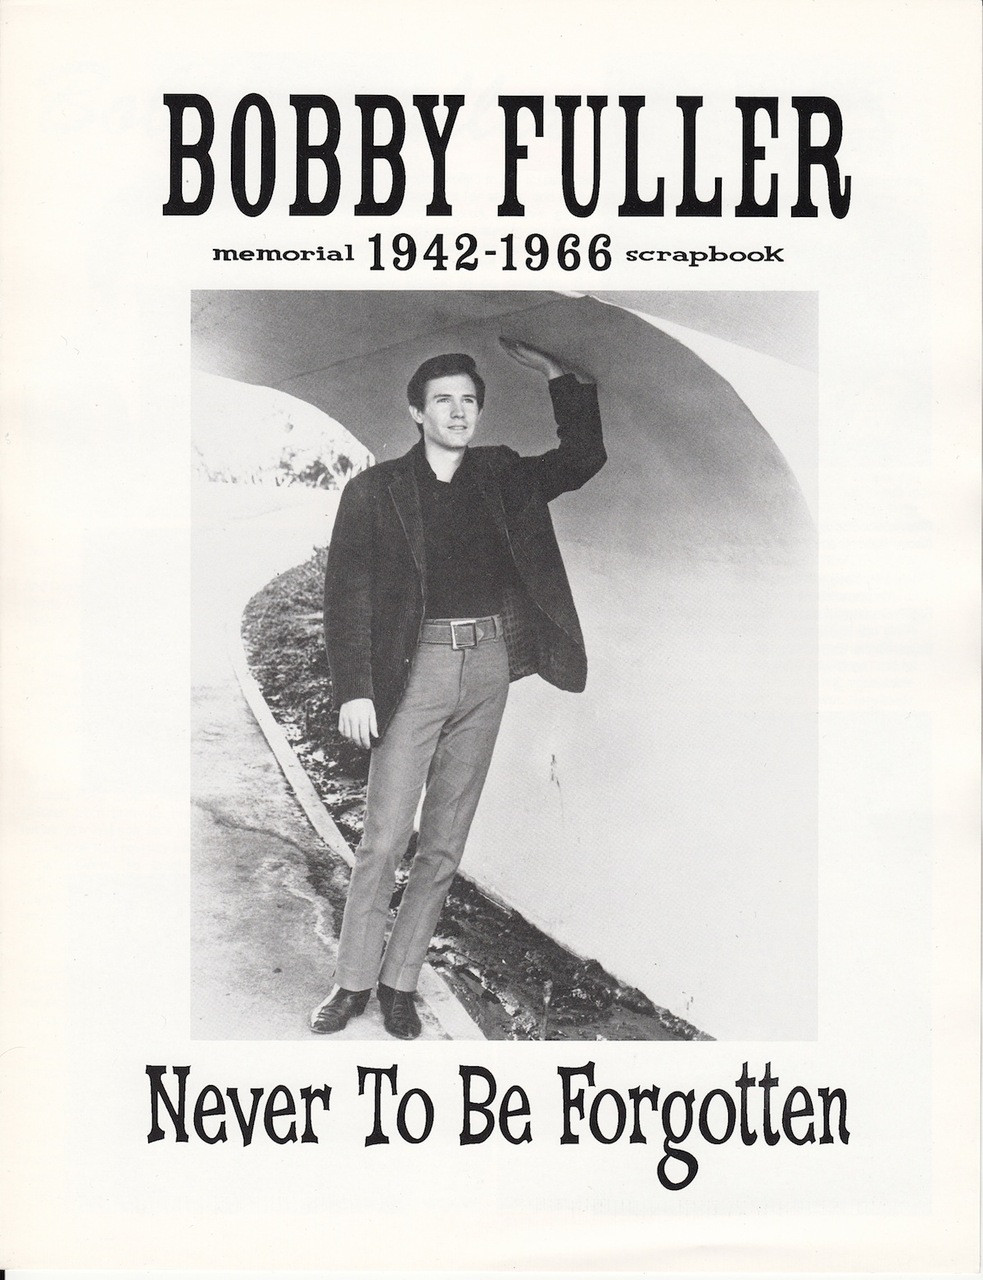 BOBBY FULLER POSTER - KICKS BOOKS 5TH ANNIVERSARY BLAST BOOK LAUNCH -  Norton Records